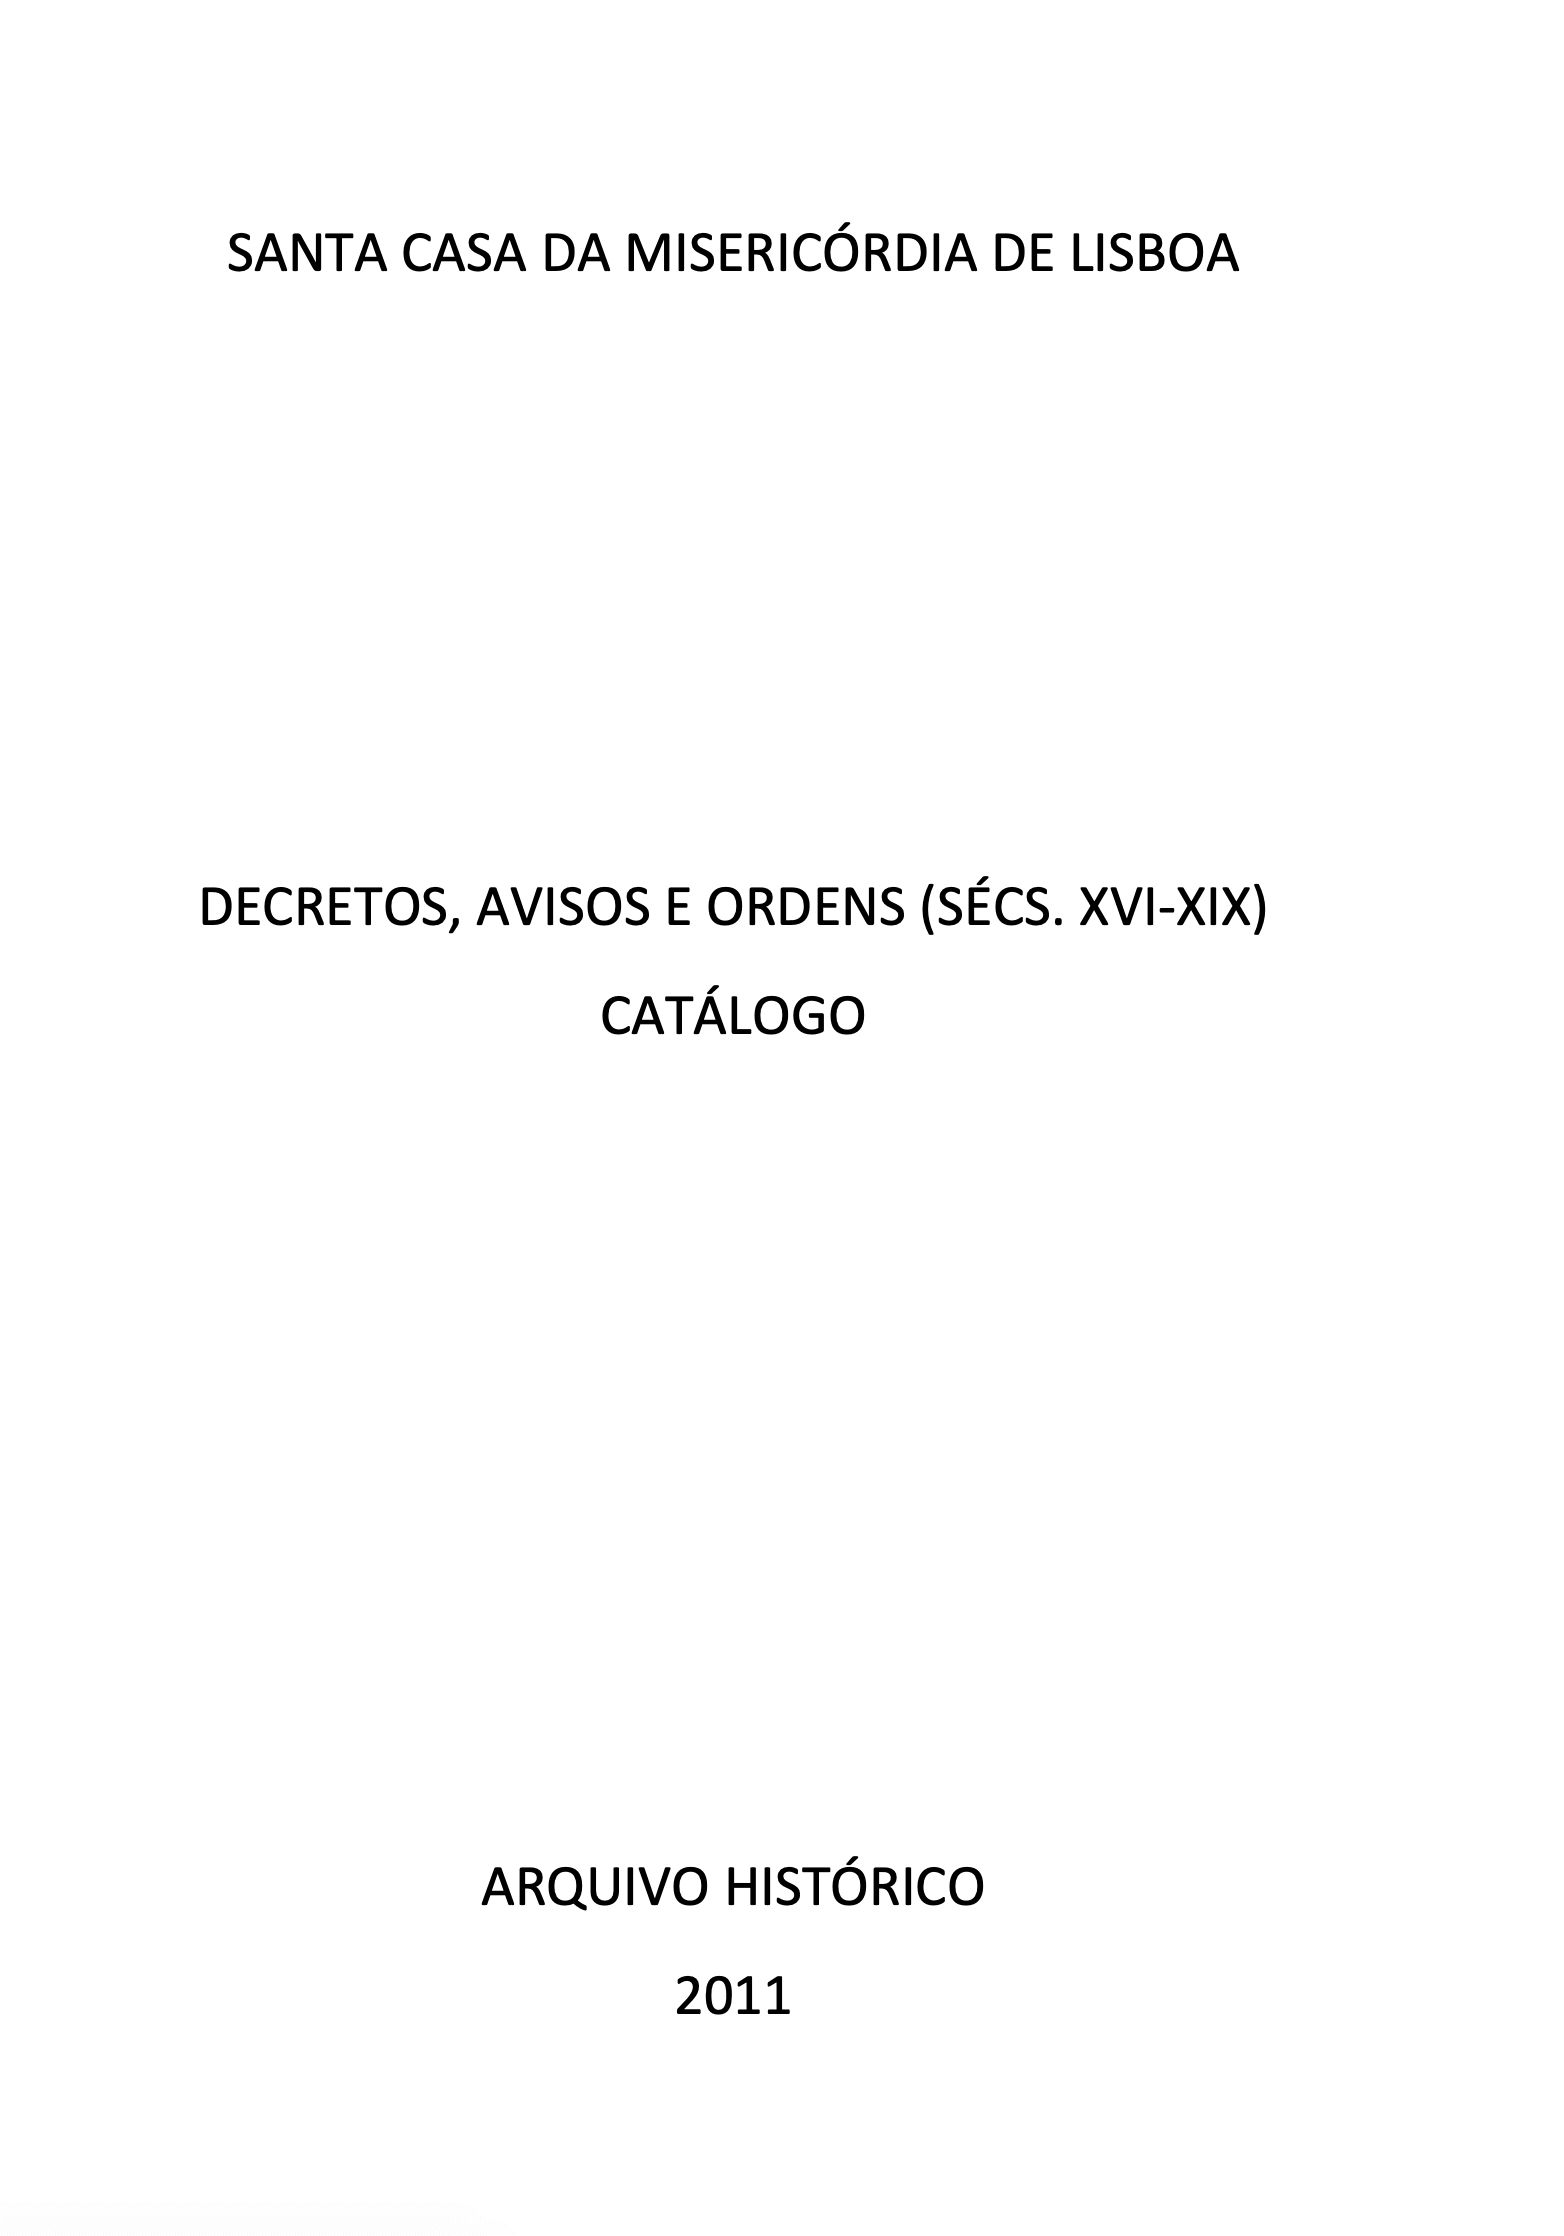 Decretos, avisos e Ordens (sécs. XVI-XIX): Catálogo